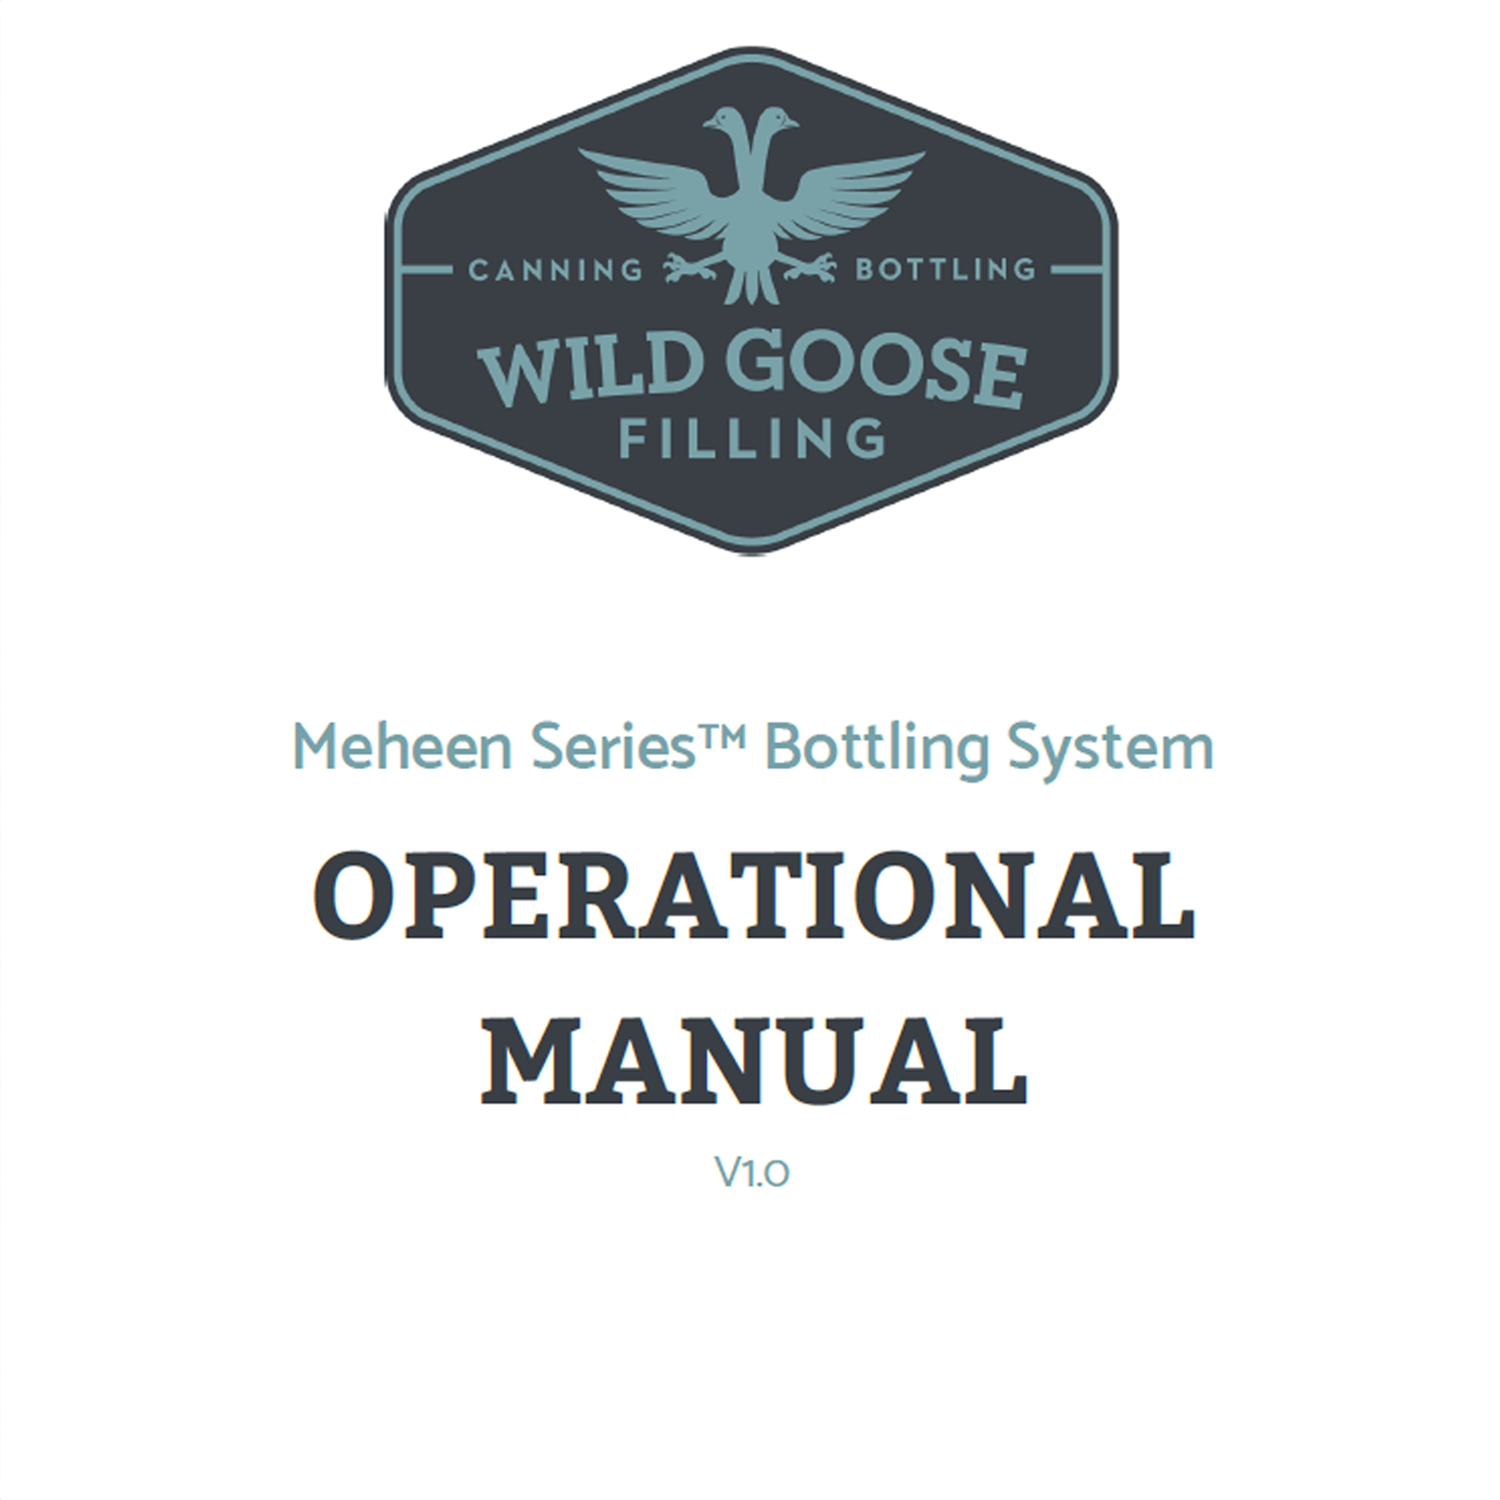 Meheen Series Bottling System Operational Manual